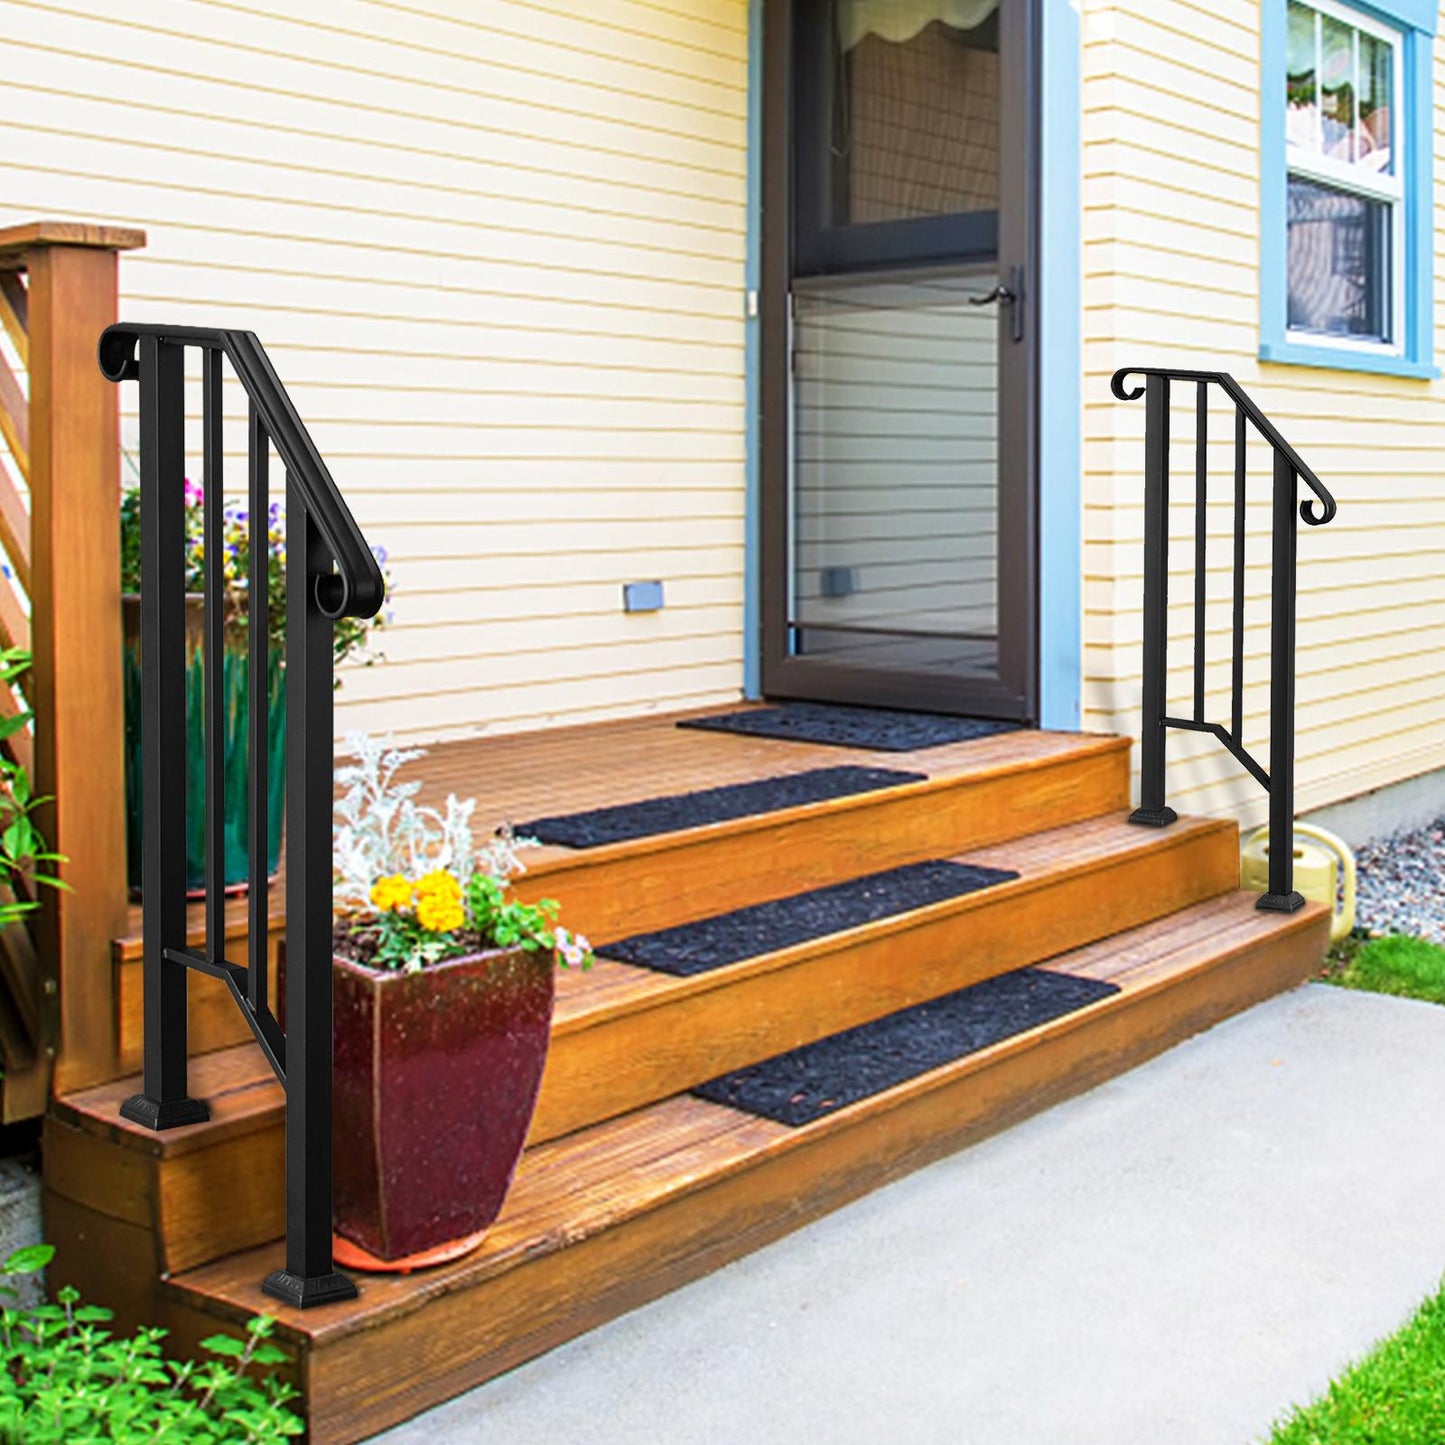 Premium Black Outdoor Stair Railing Models for 3-4 Steps, 2-3 Steps or 1-2 Steps , Iron Hand Rails for Concrete Steps